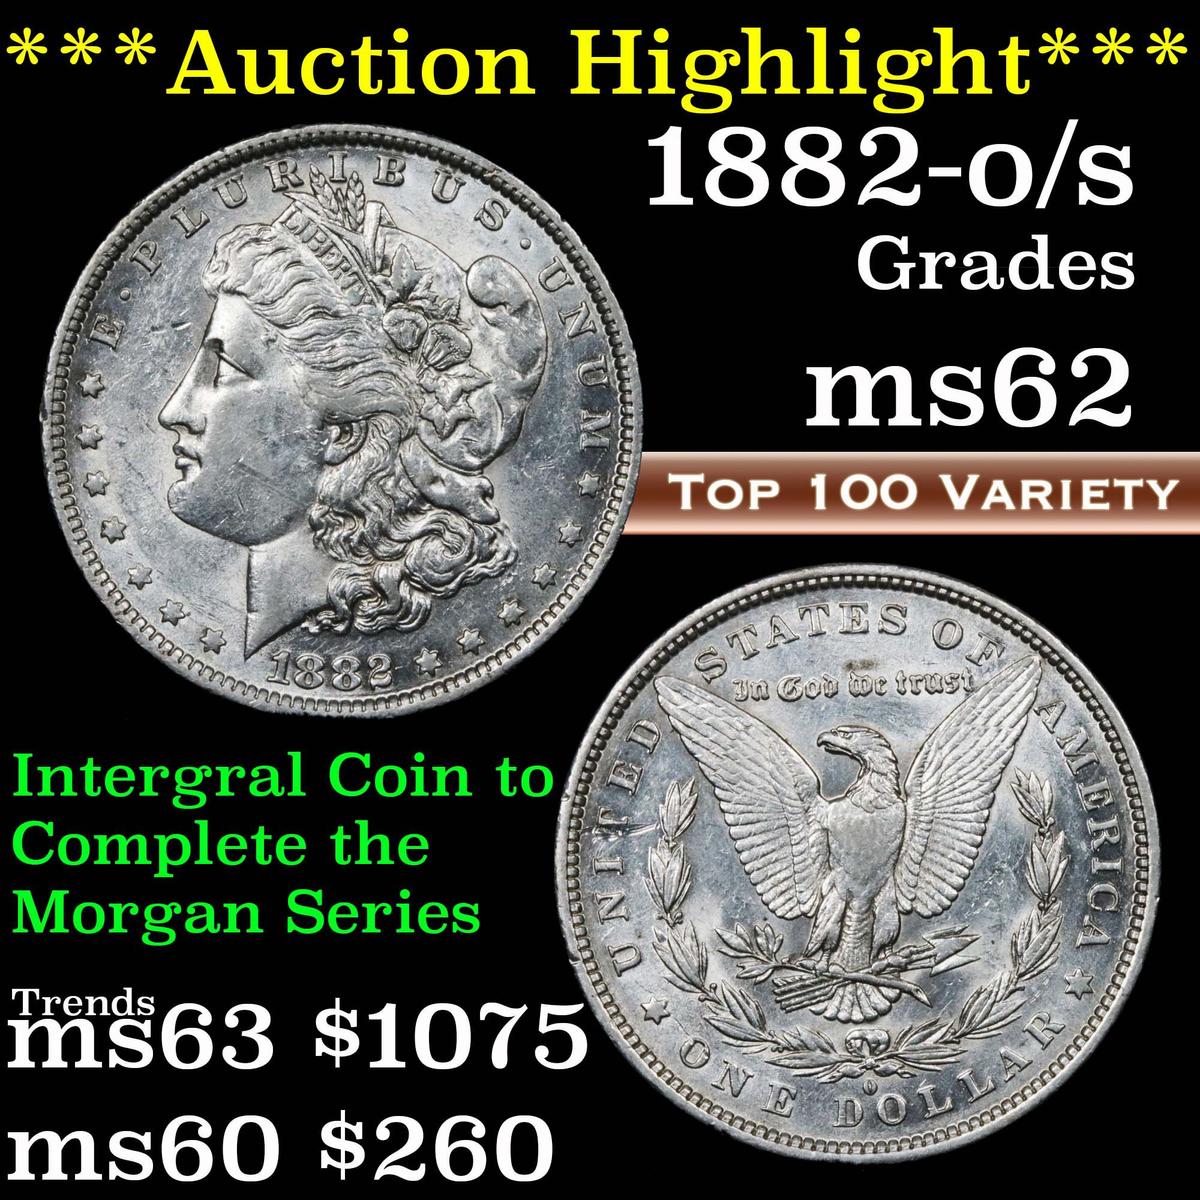 ***Auction Highlight*** 1882-o/s Morgan Dollar $1 Grades Select Unc (fc)